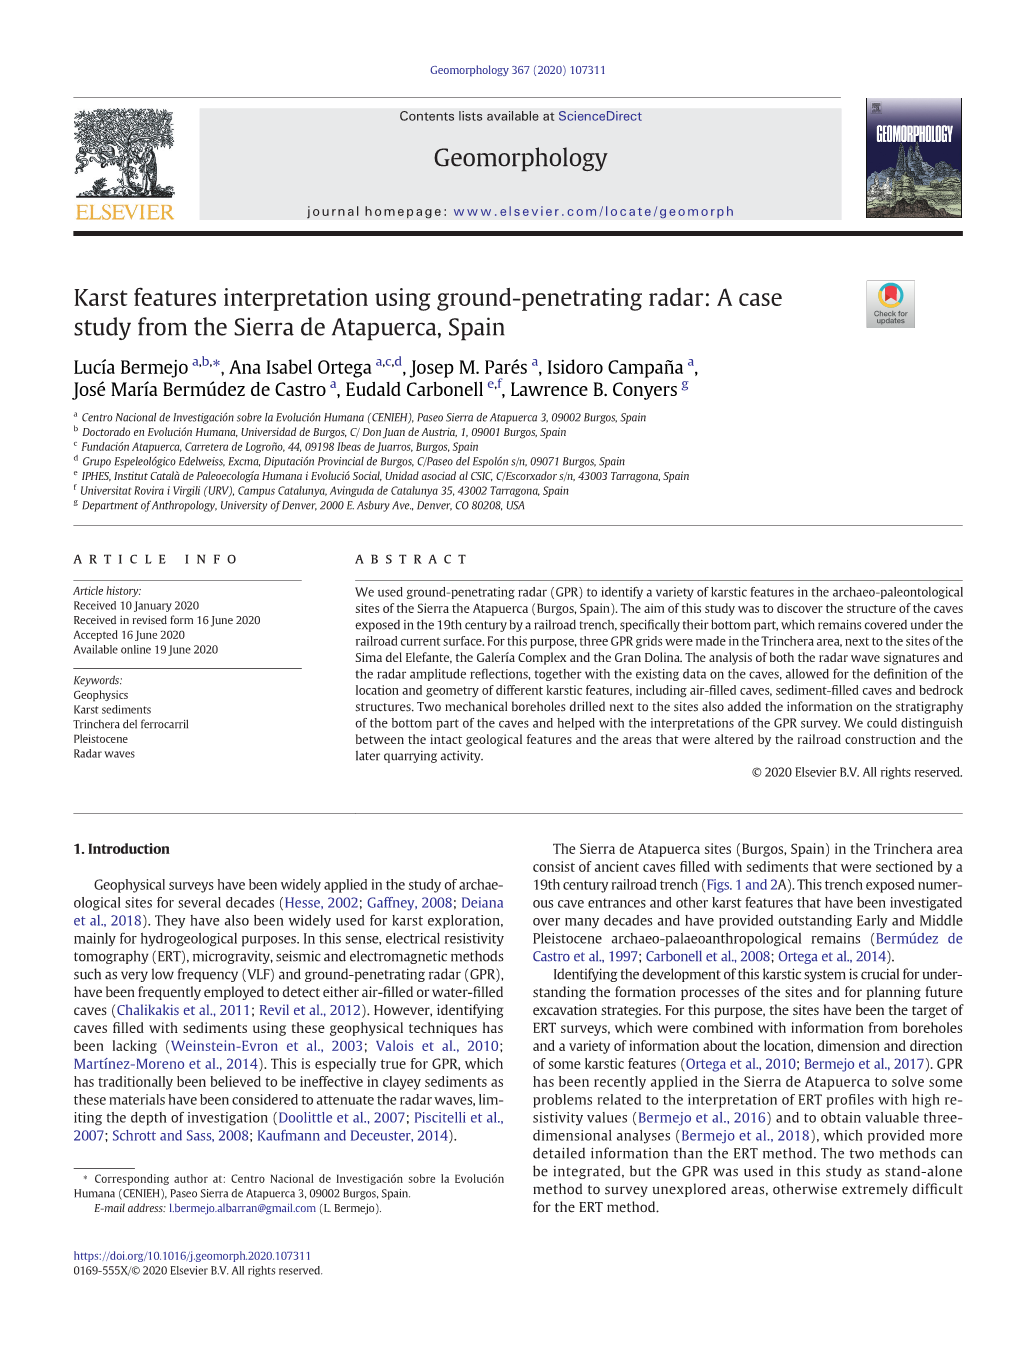 Karst Features Interpretation Using Ground-Penetrating Radar: a Case Study from the Sierra De Atapuerca, Spain